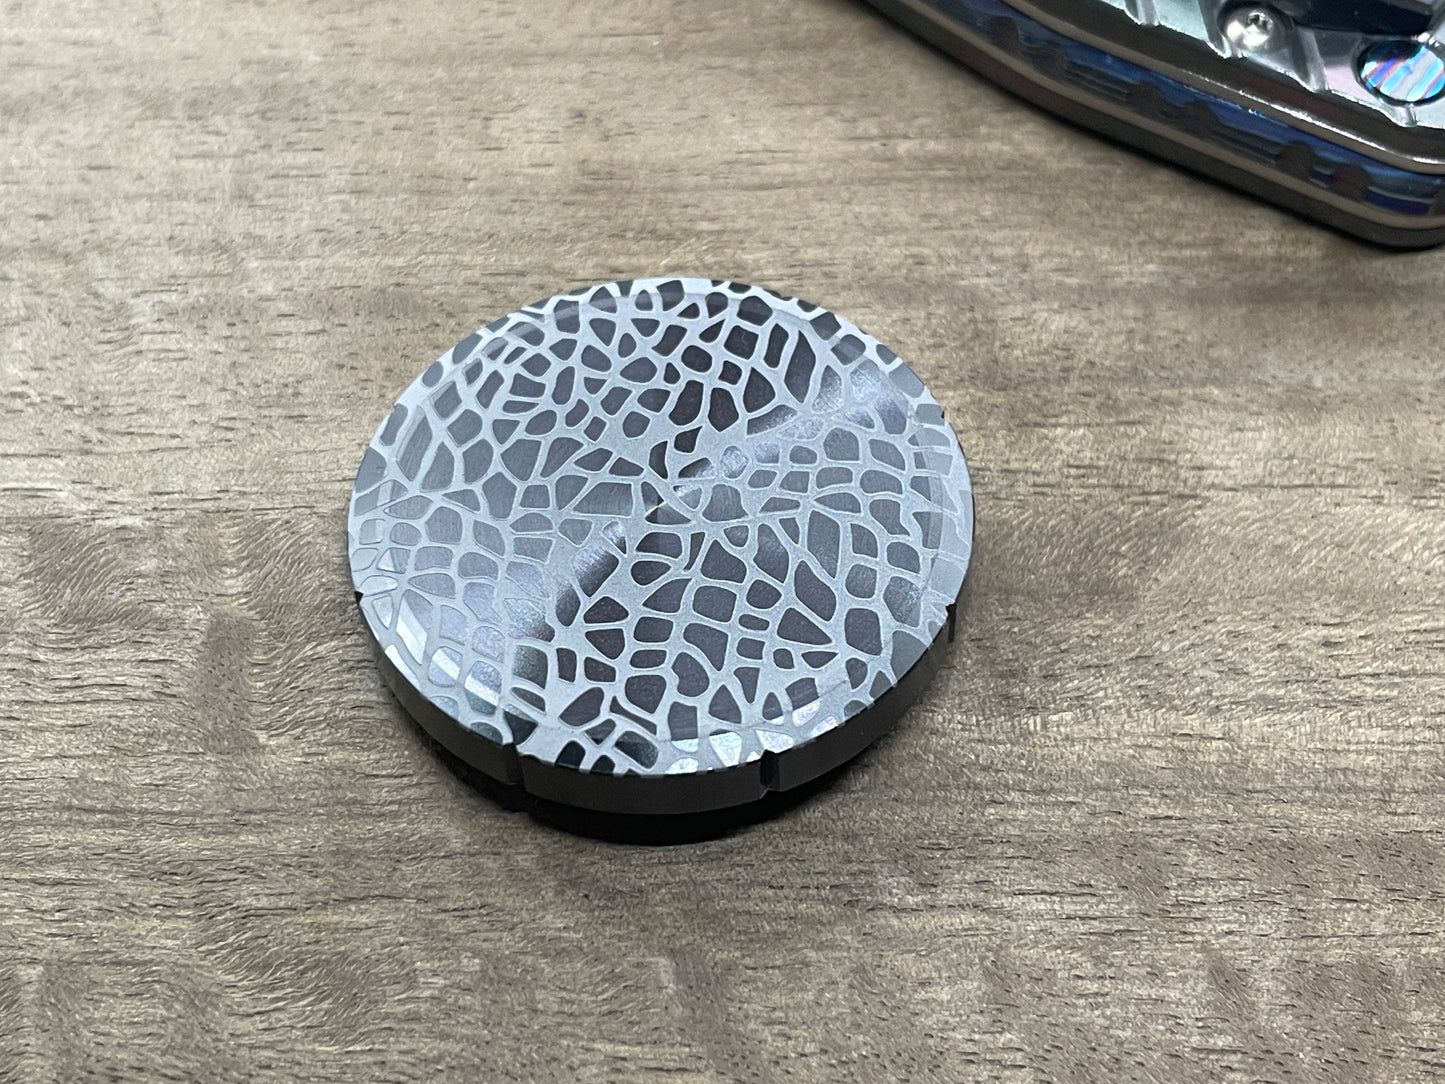 NEBULA Zirconium Spinning Worry Coin Spinning Top